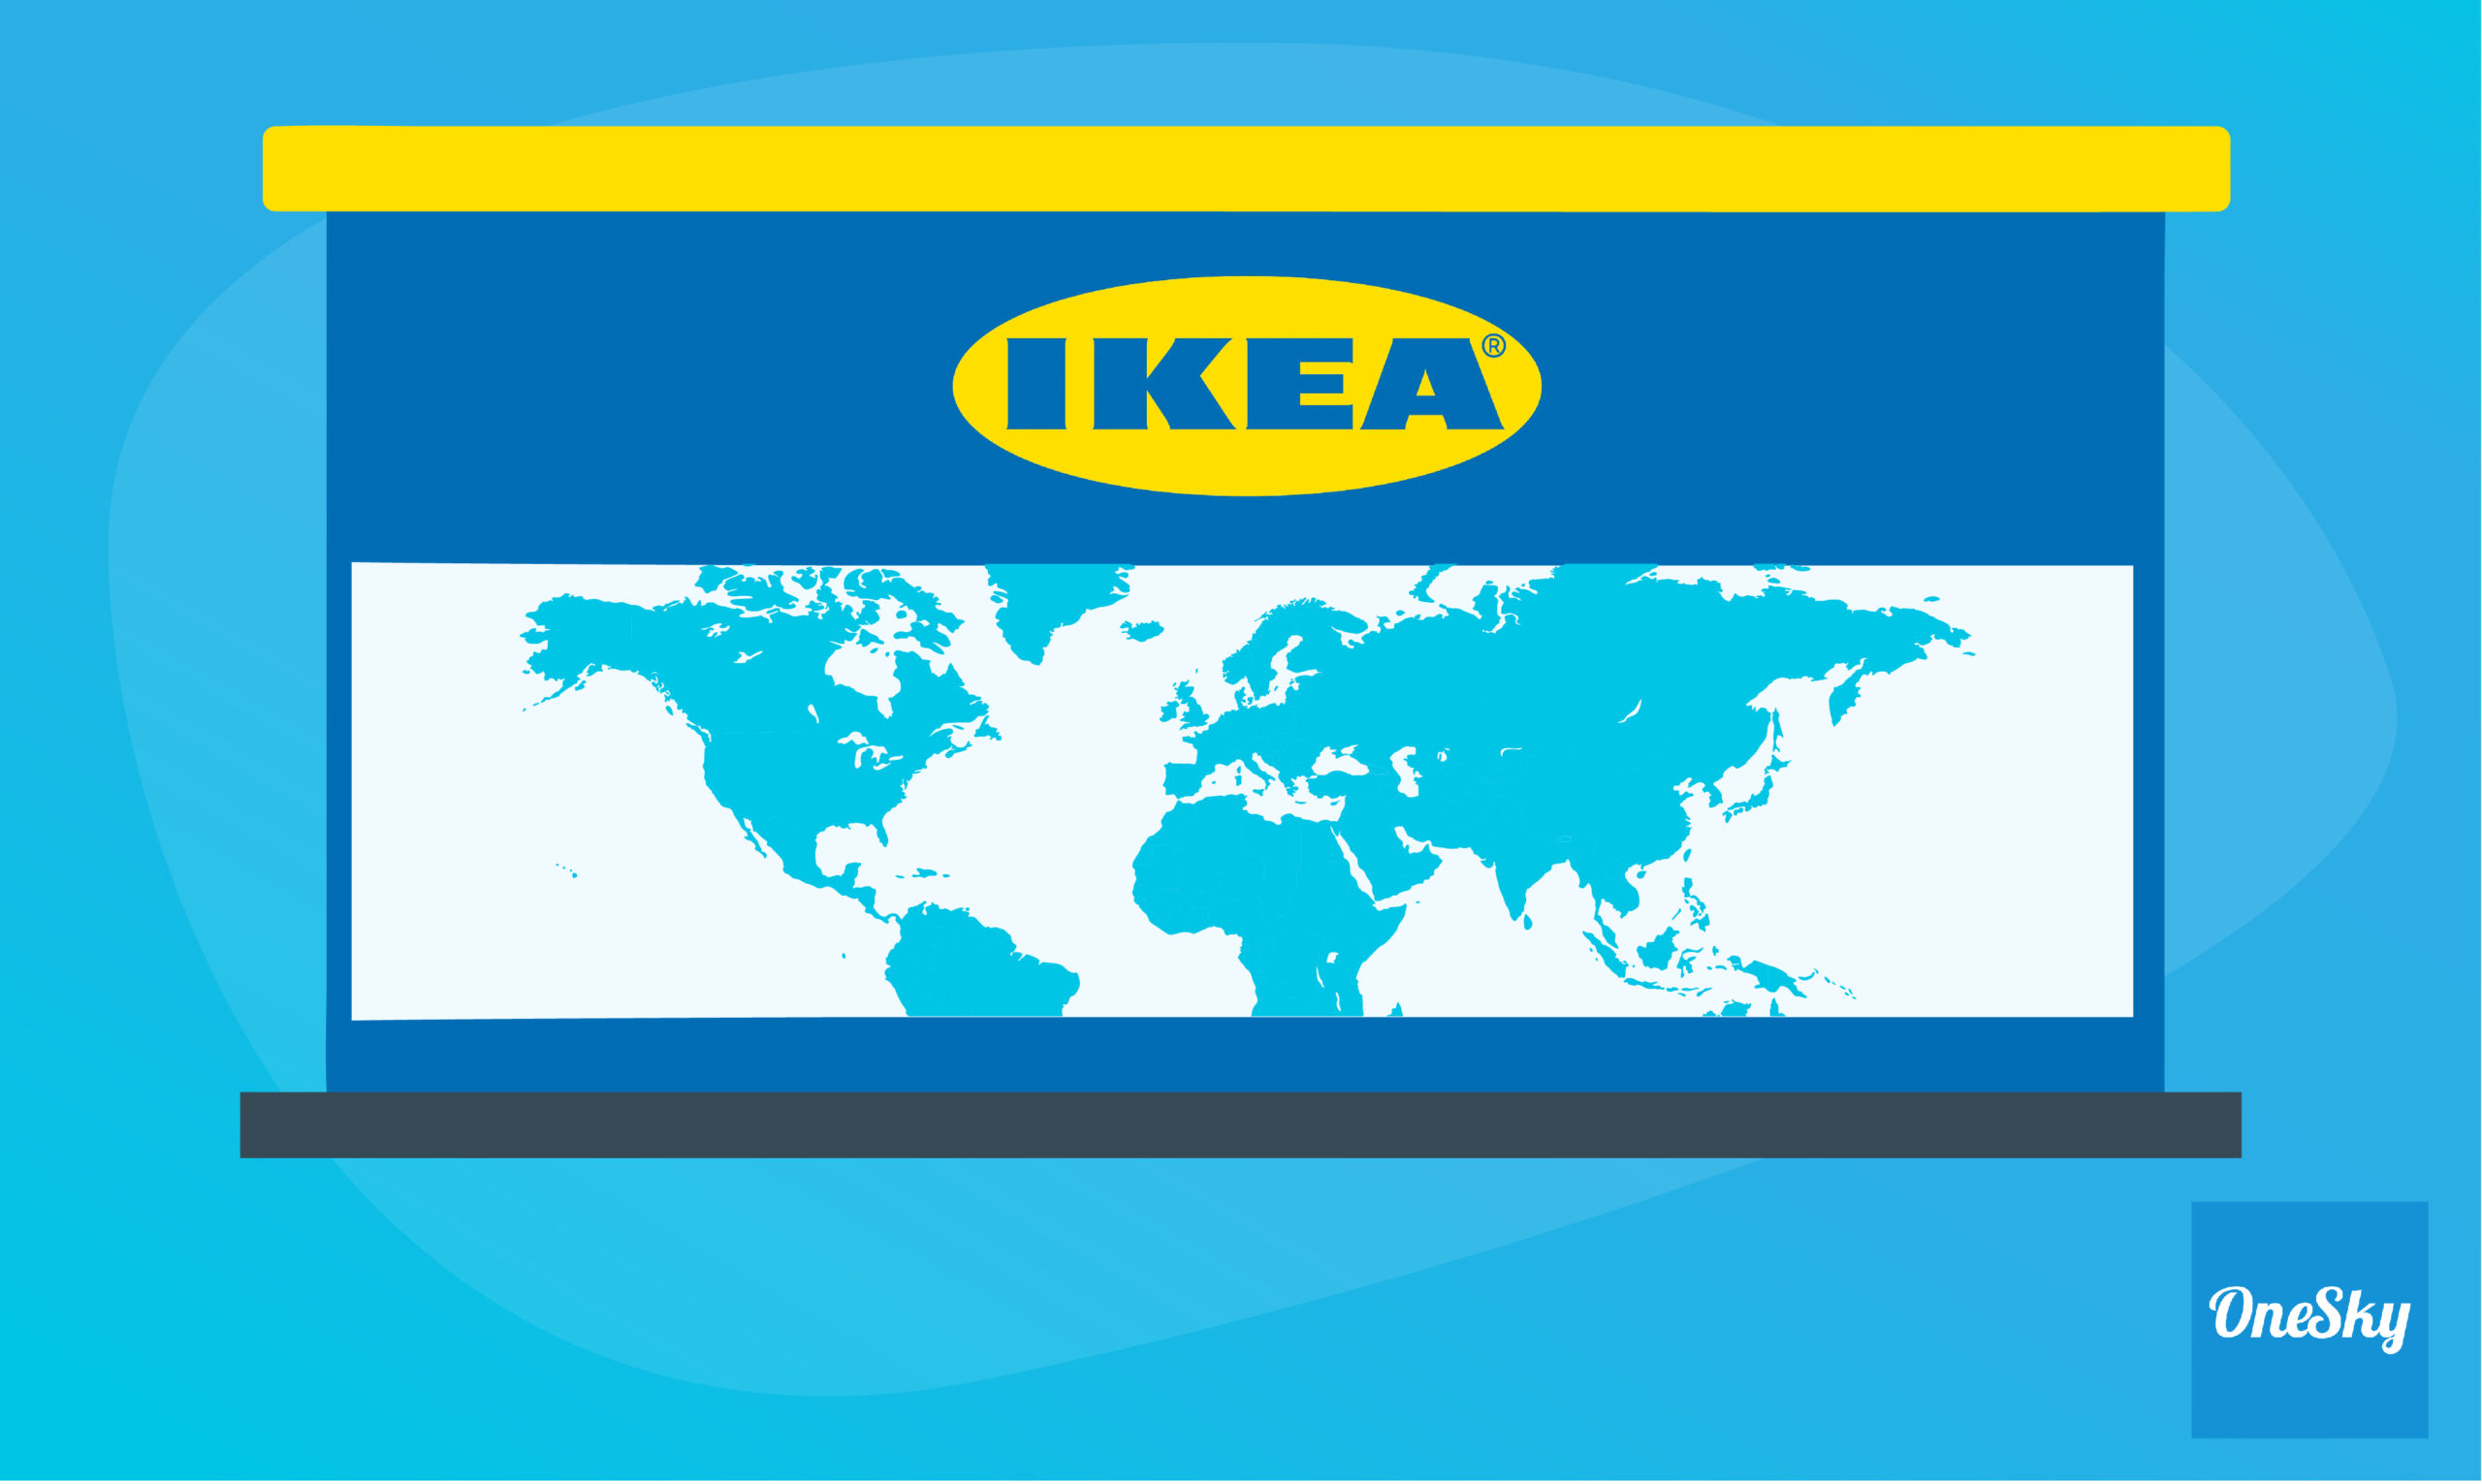 Meet some of our Social Entrepreneurship partners – IKEA Global